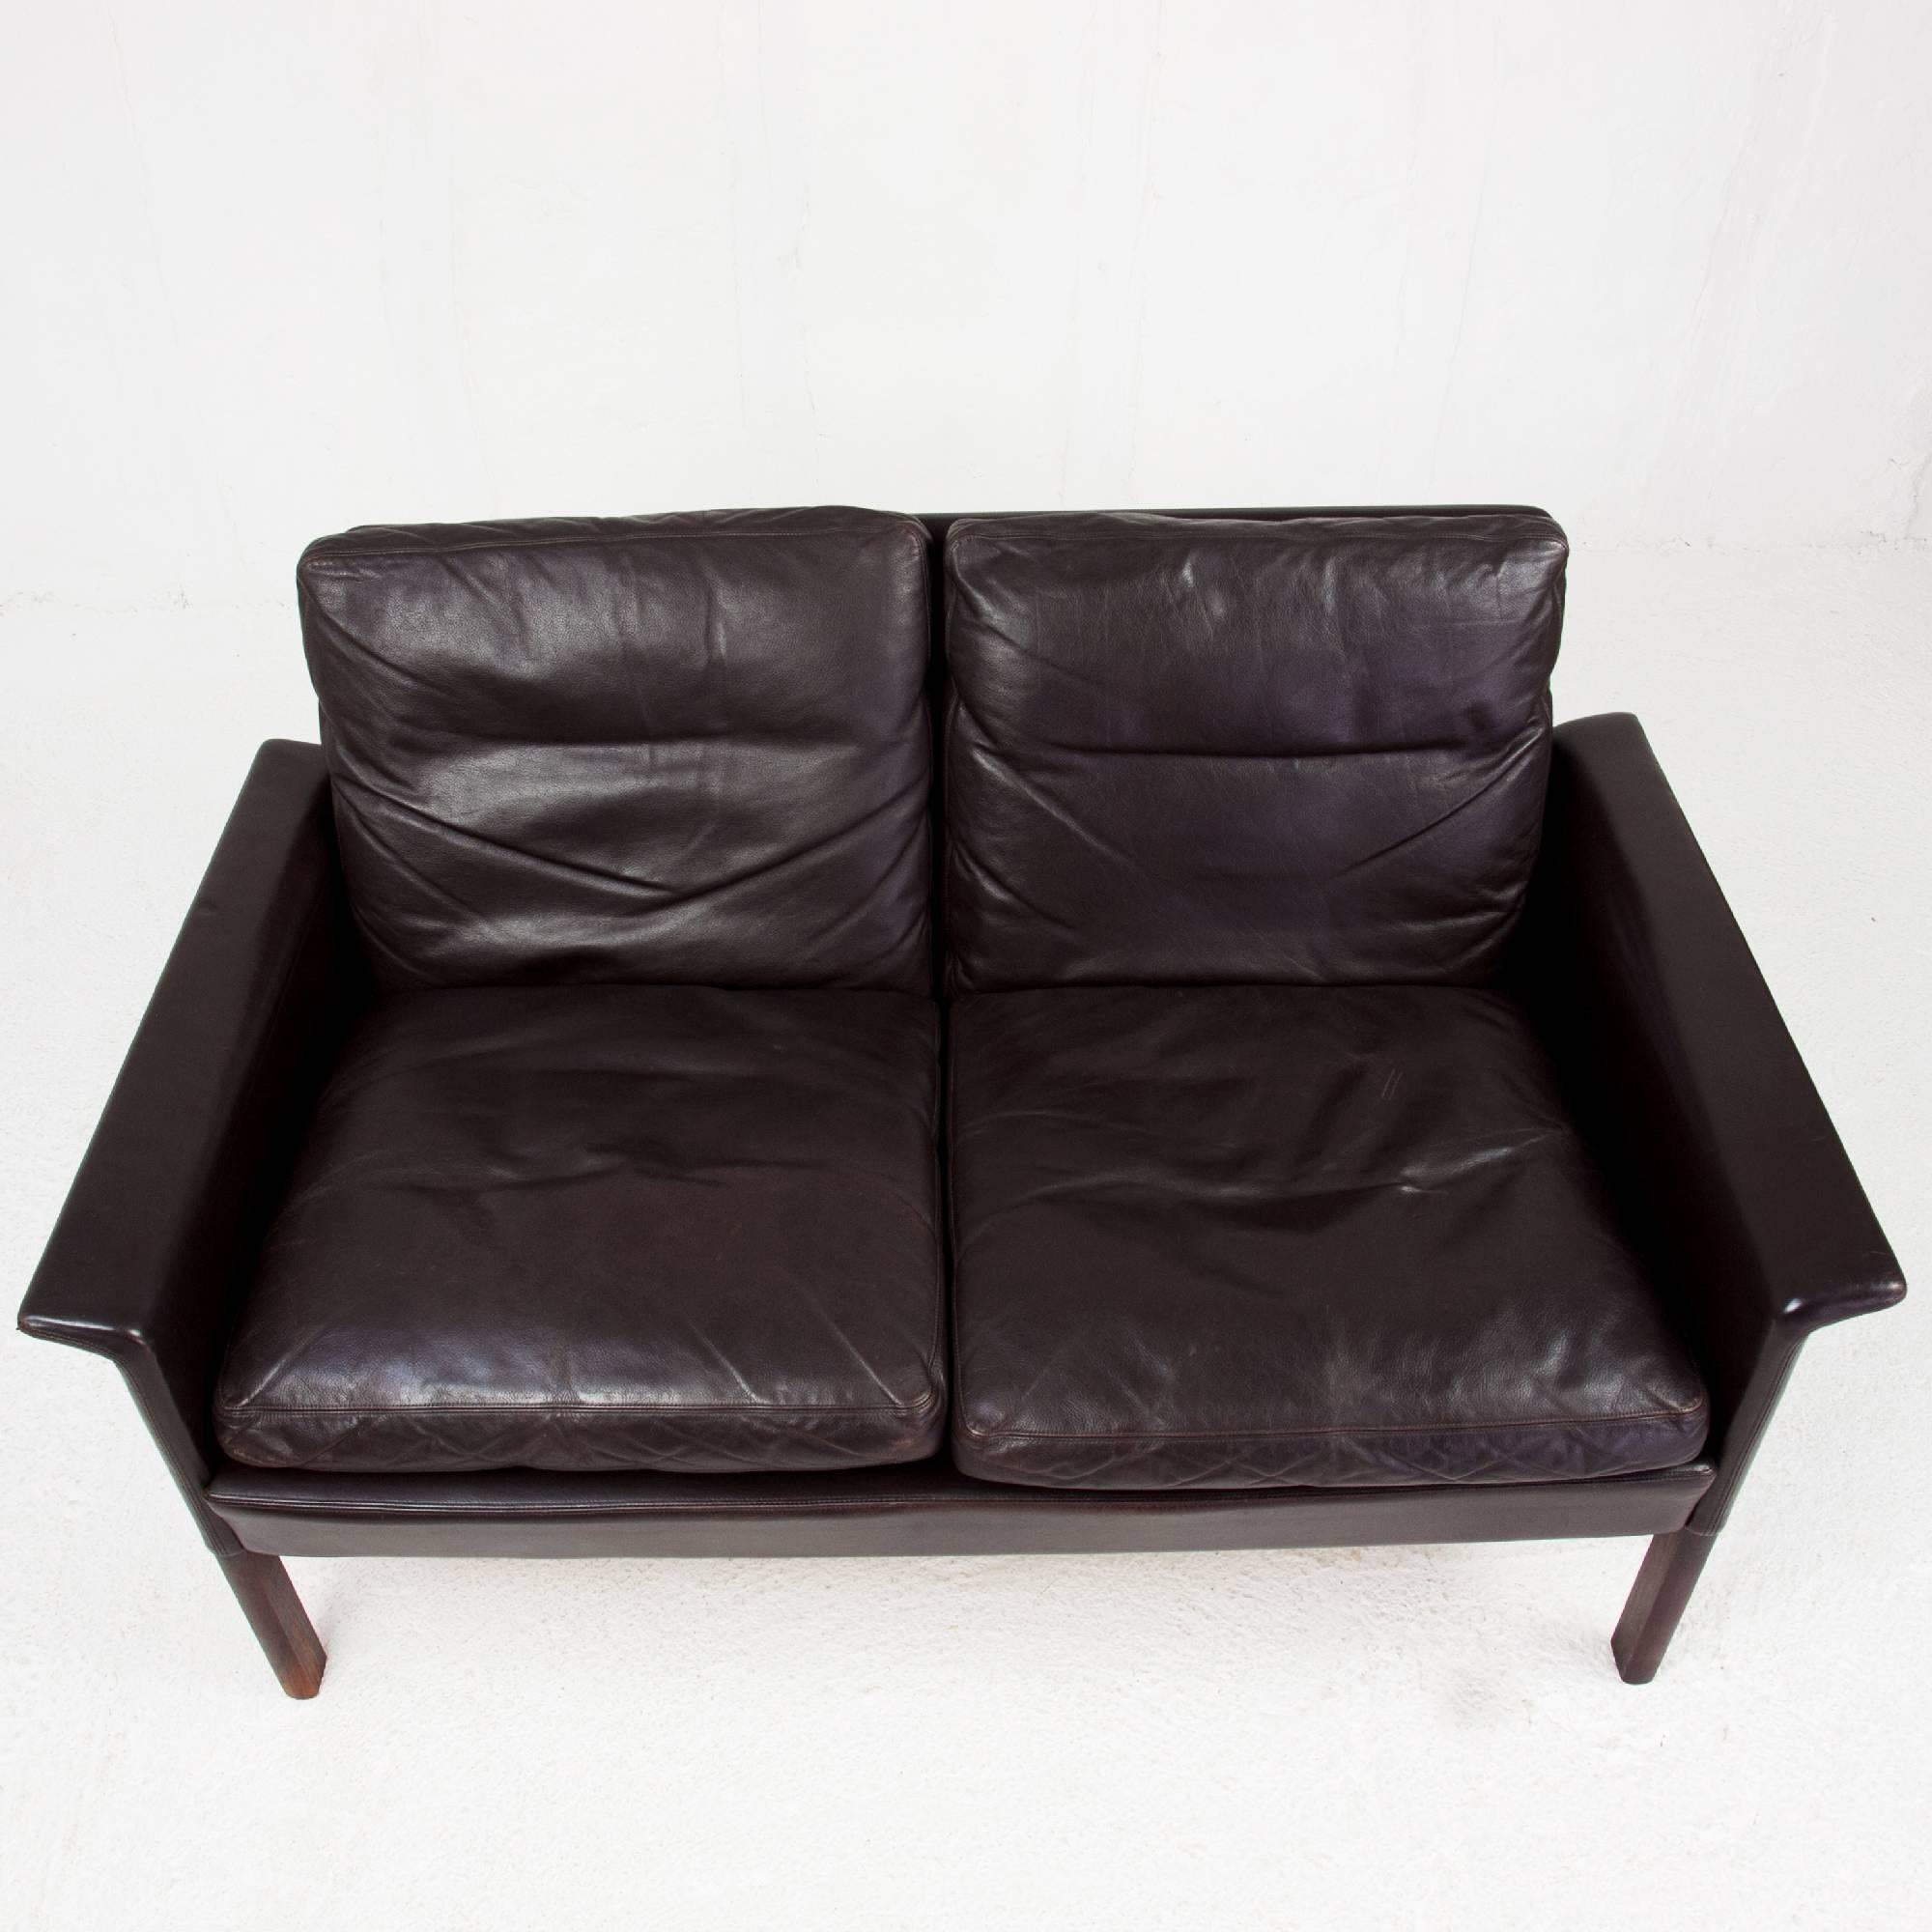 Mid-Century Modern Hans Olsen Two-Seat Leather Sofa Model 500 for C/S Møbler